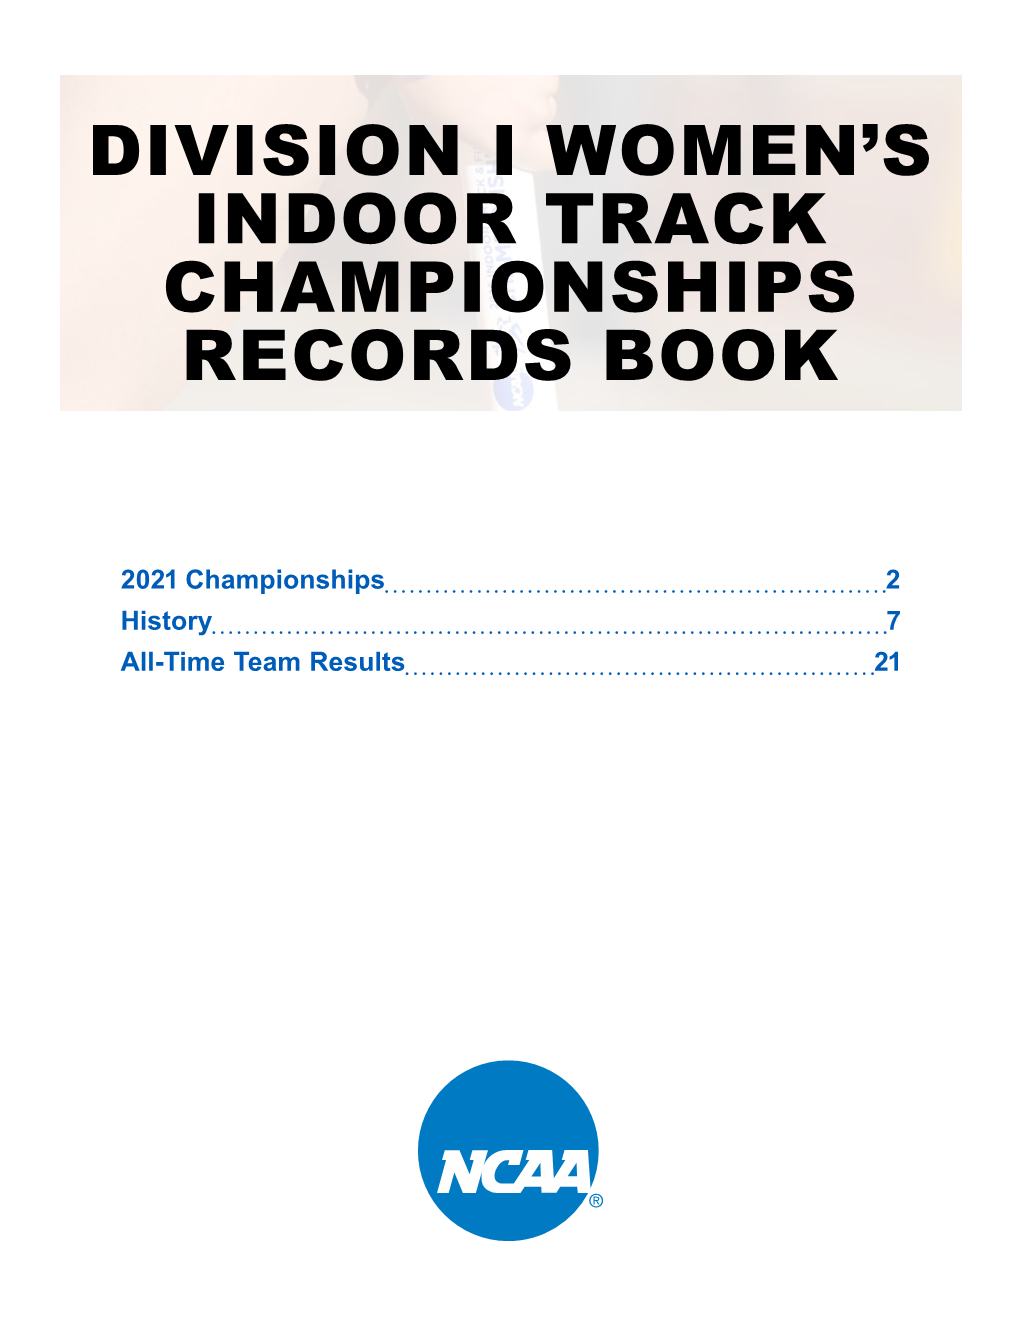 Division I Women's Indoor Track